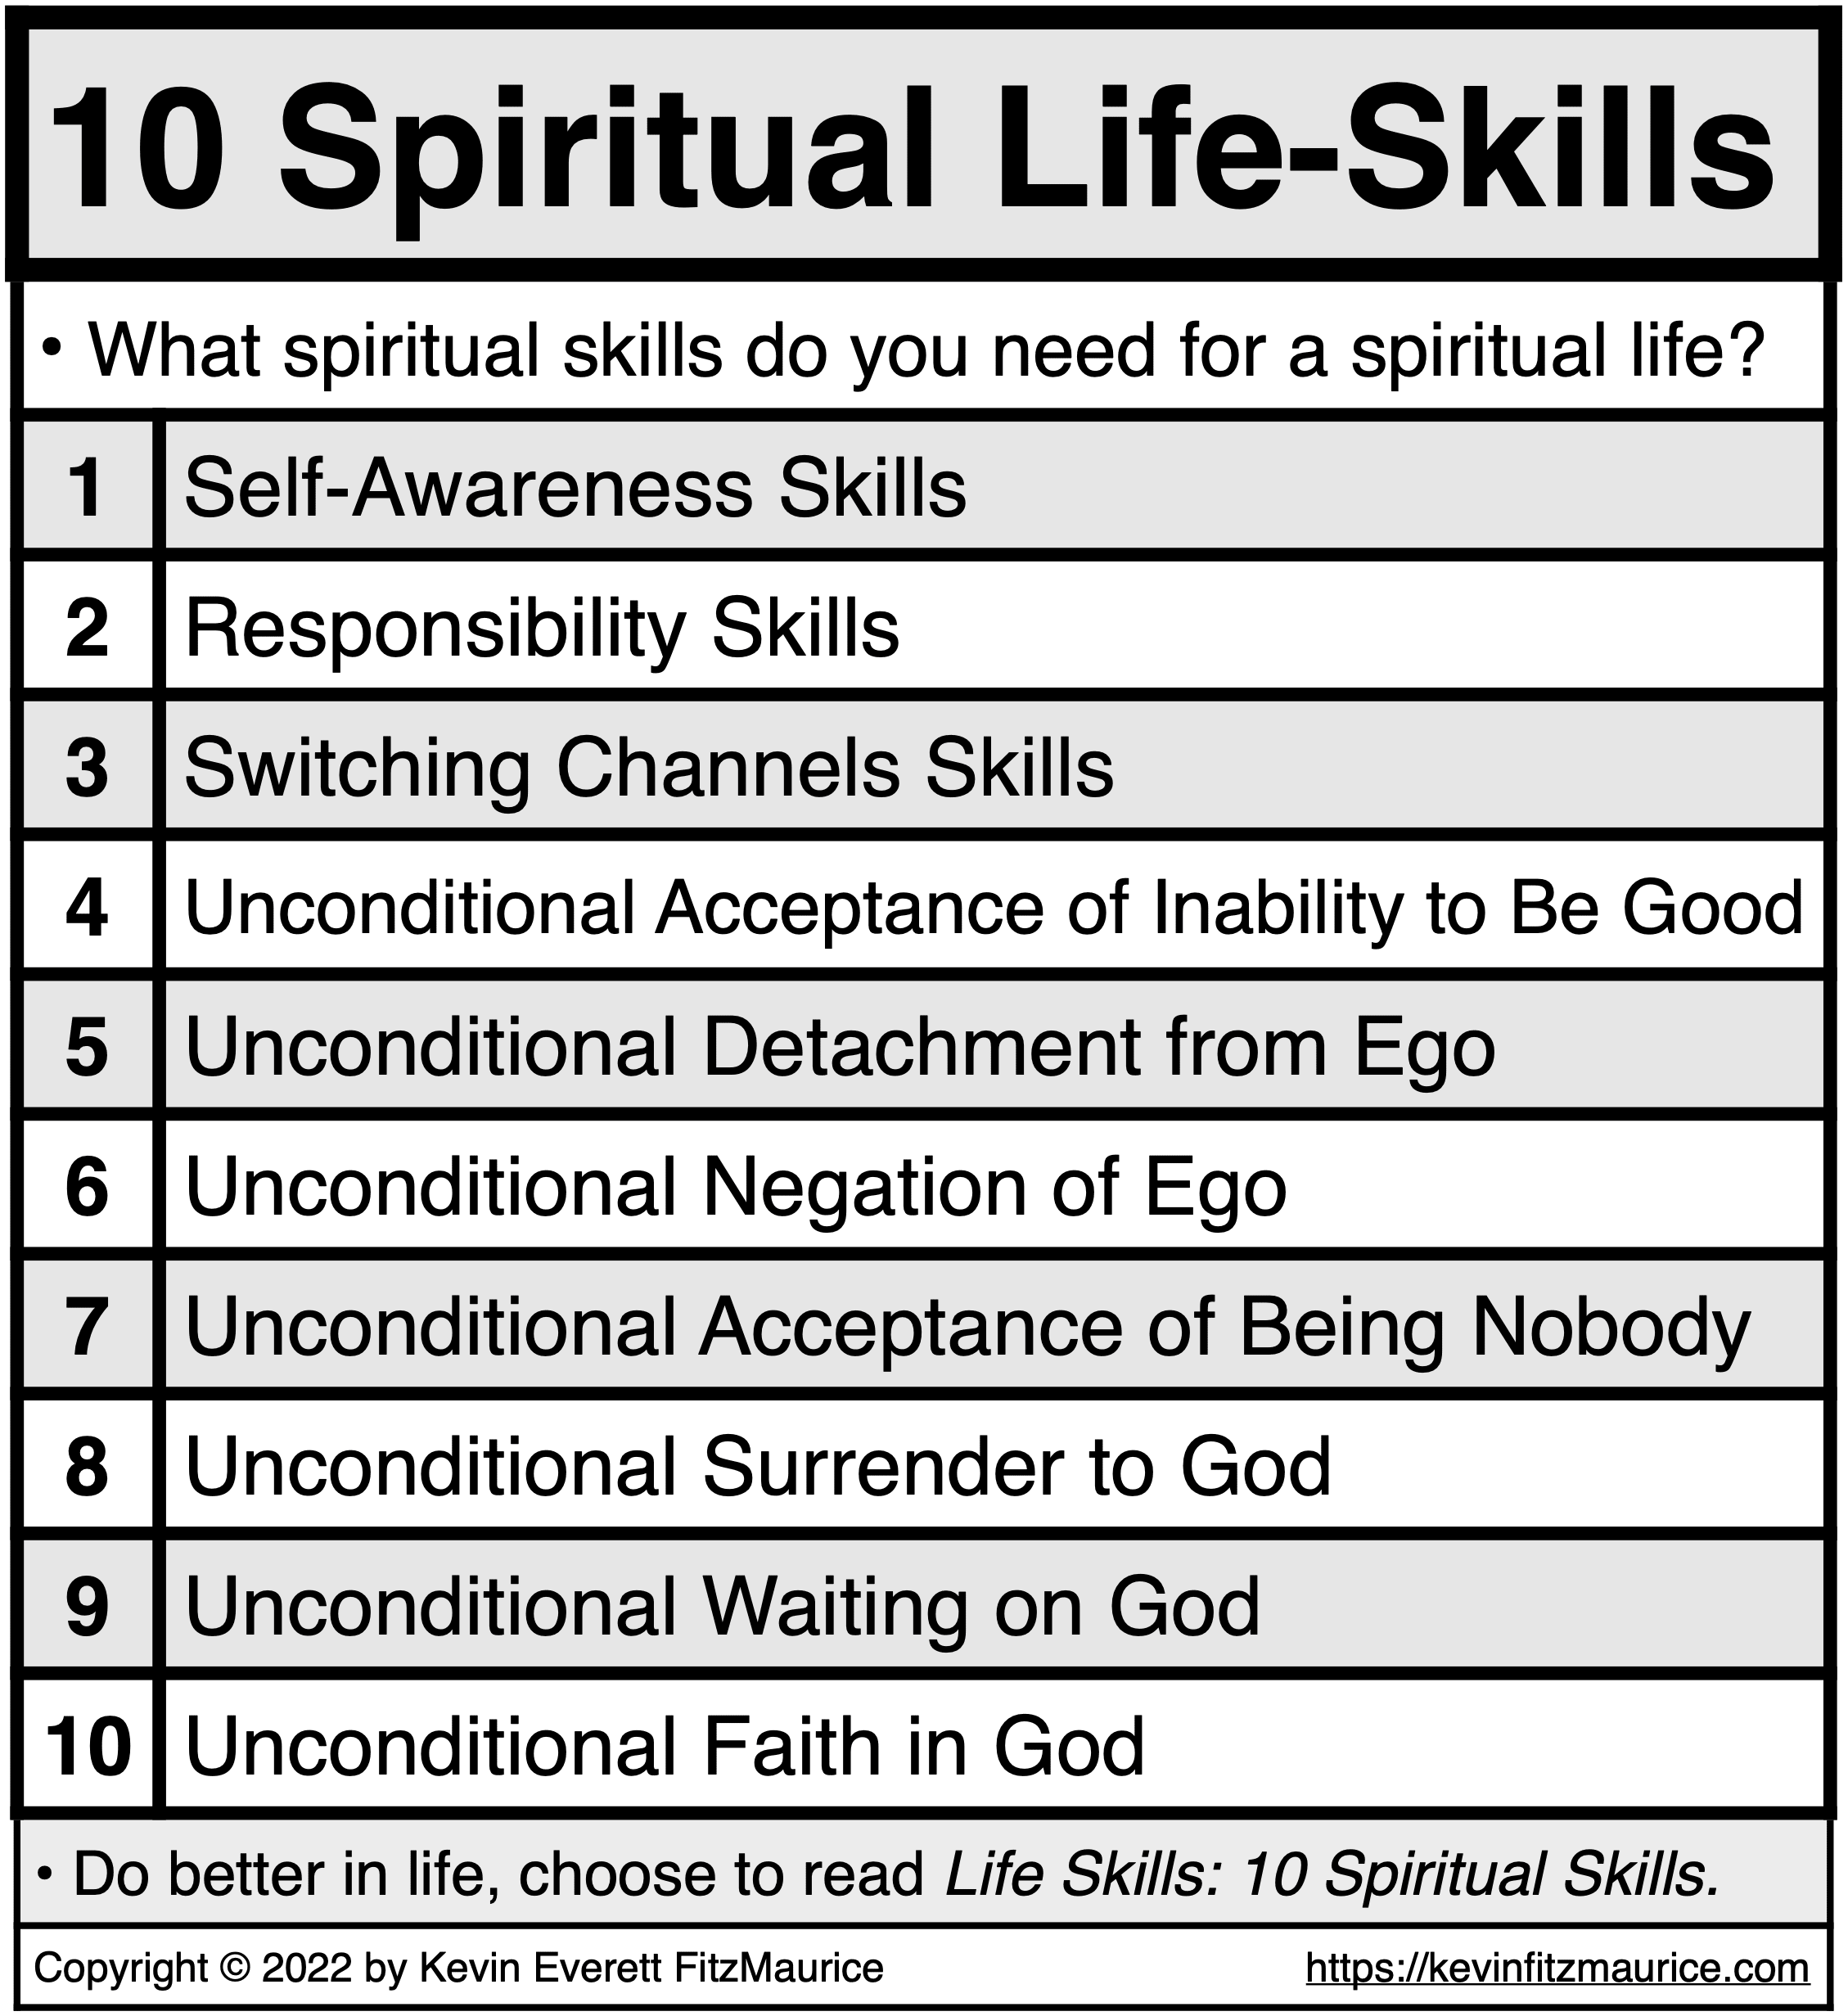 10 Spiritual Life-Skills